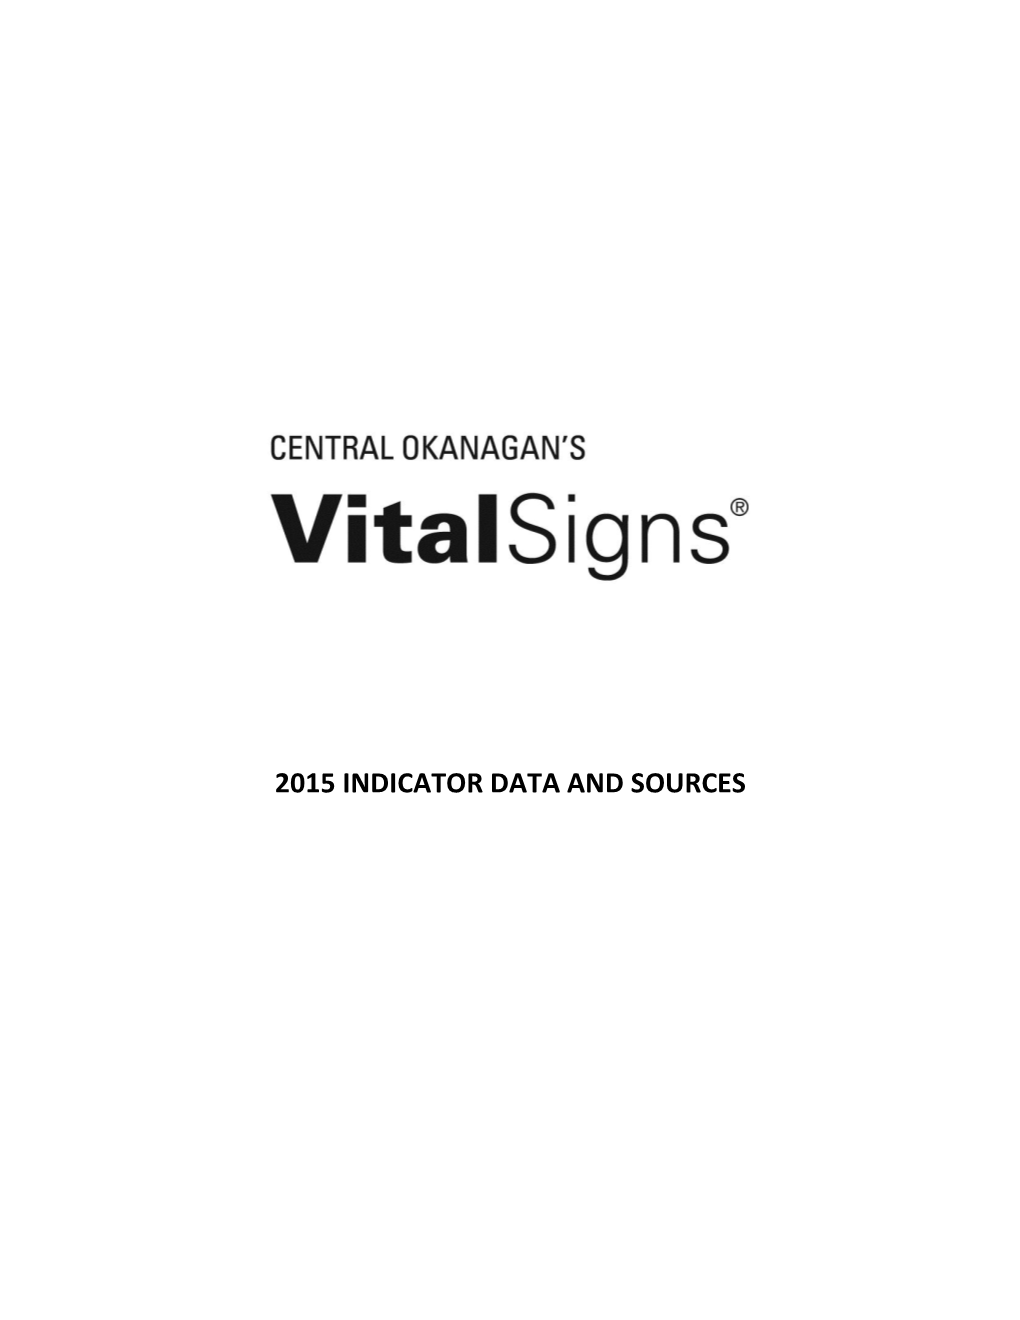 Central Okanagan's Vital Signs®